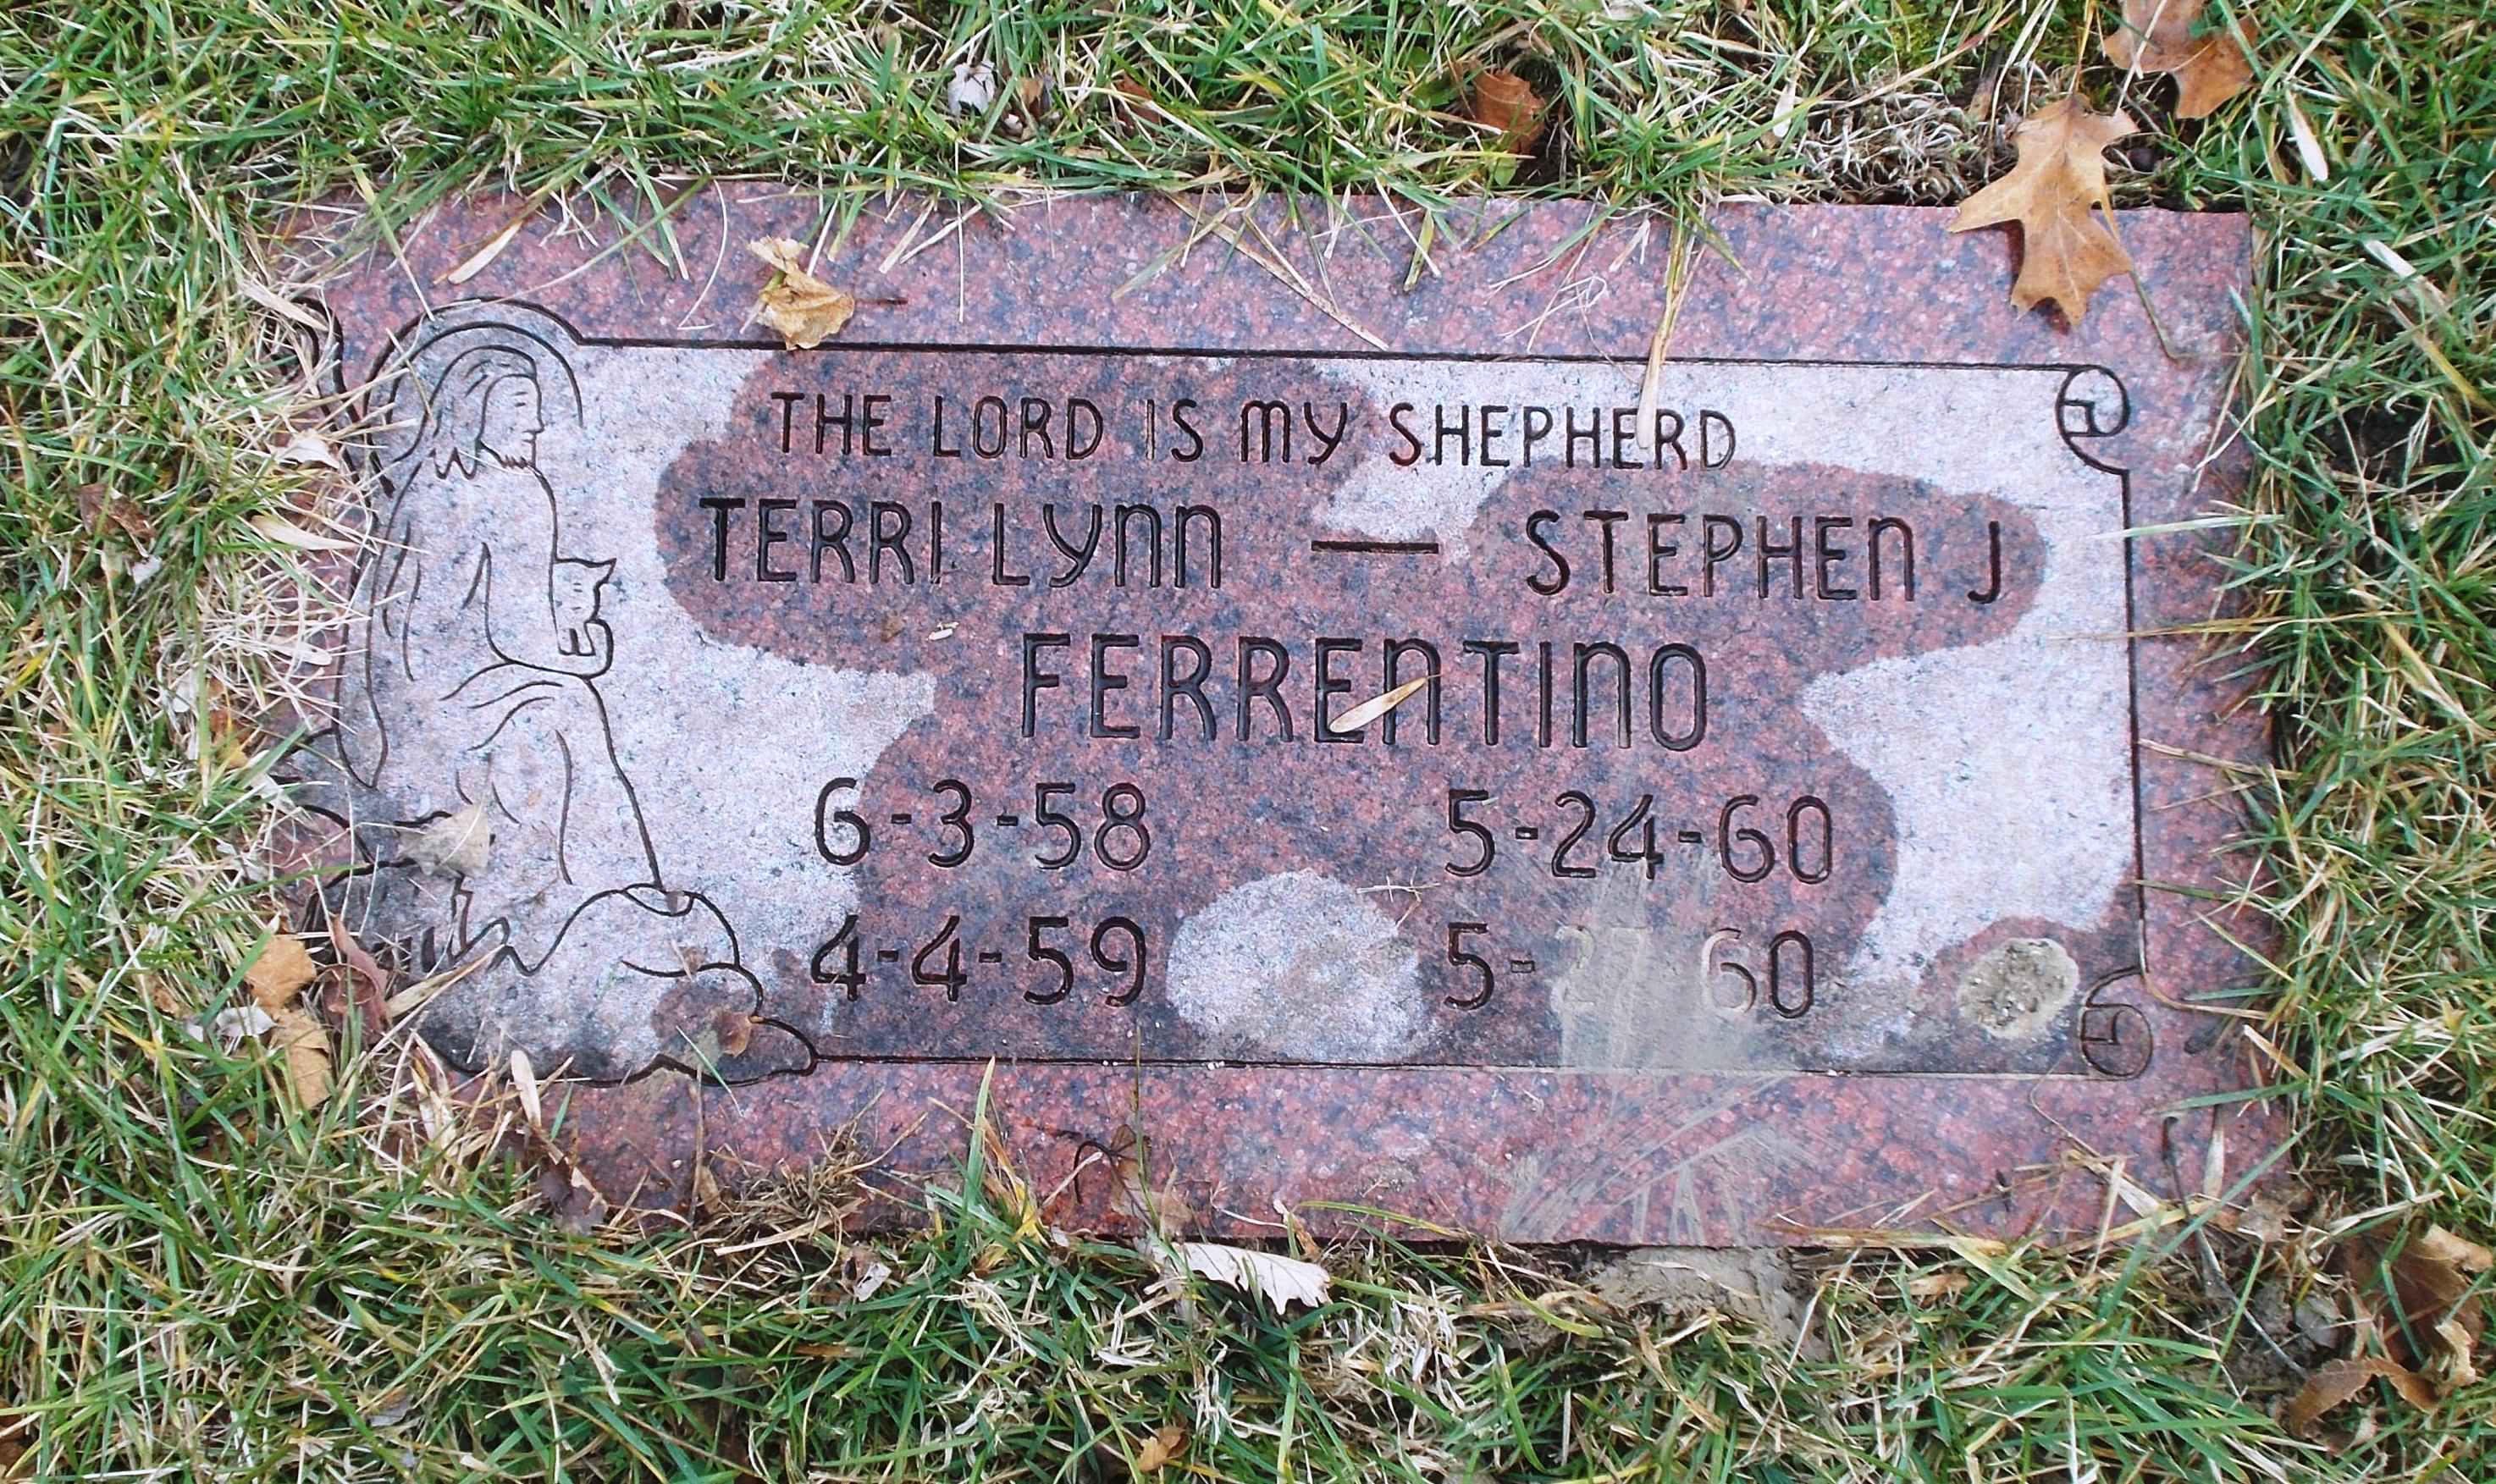 Stephen J Ferrentino